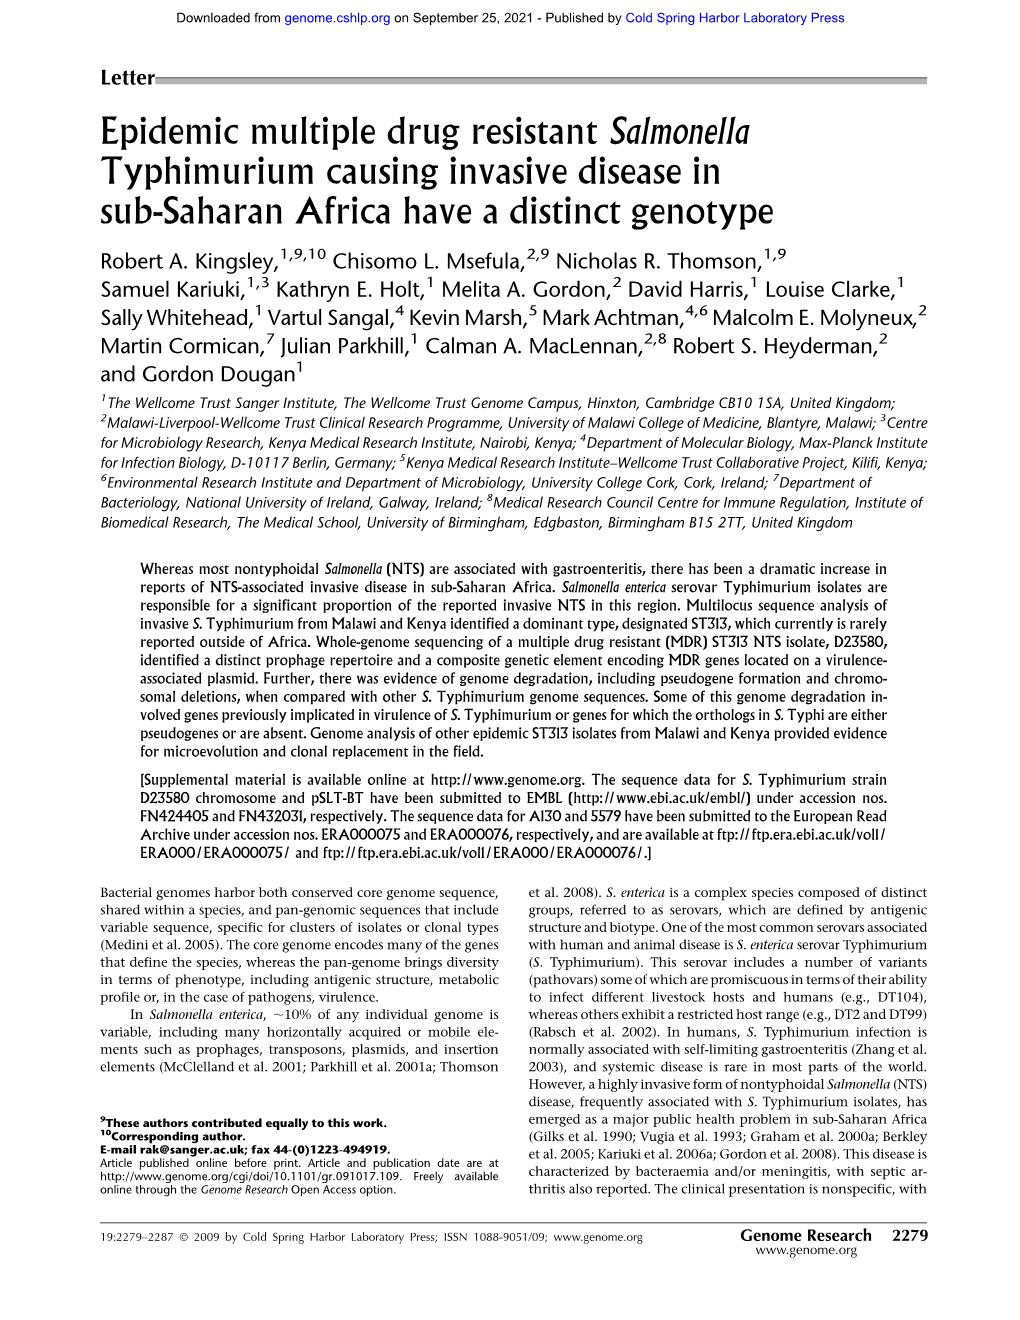 Epidemic Multiple Drug Resistant Salmonella Typhimurium Causing Invasive Disease in Sub-Saharan Africa Have a Distinct Genotype